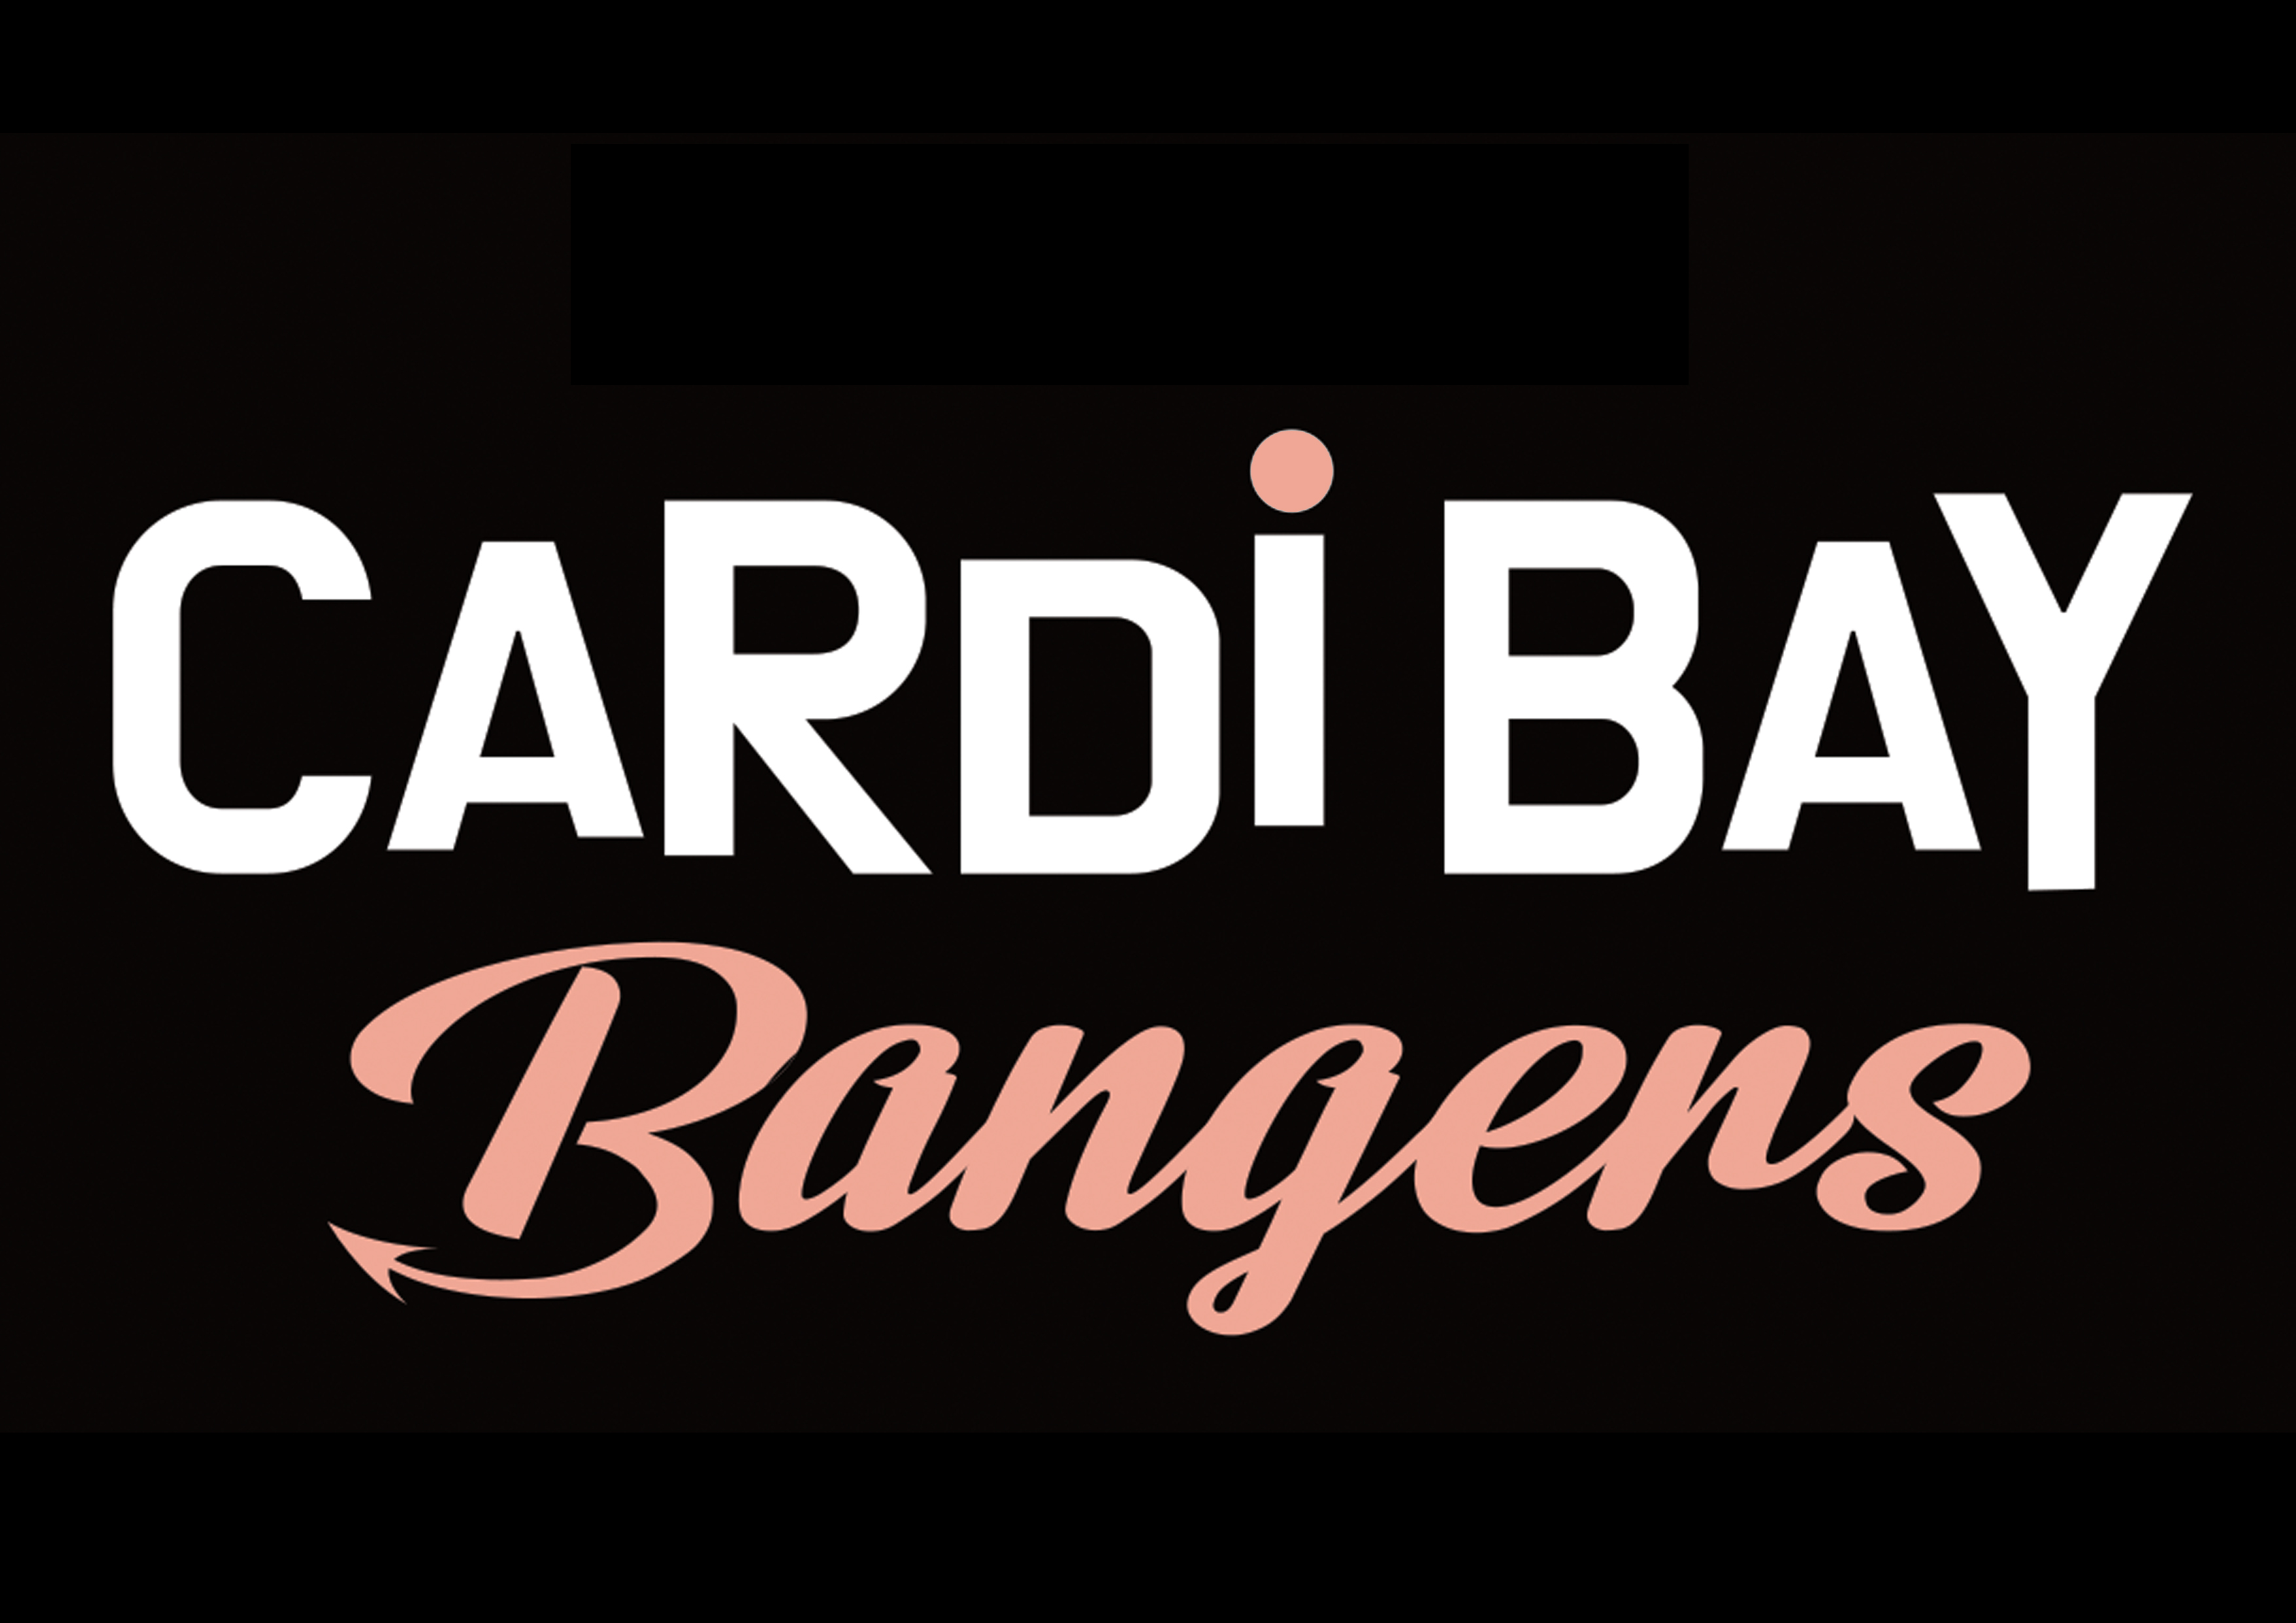 cardi bay brand no pound (1).jpg